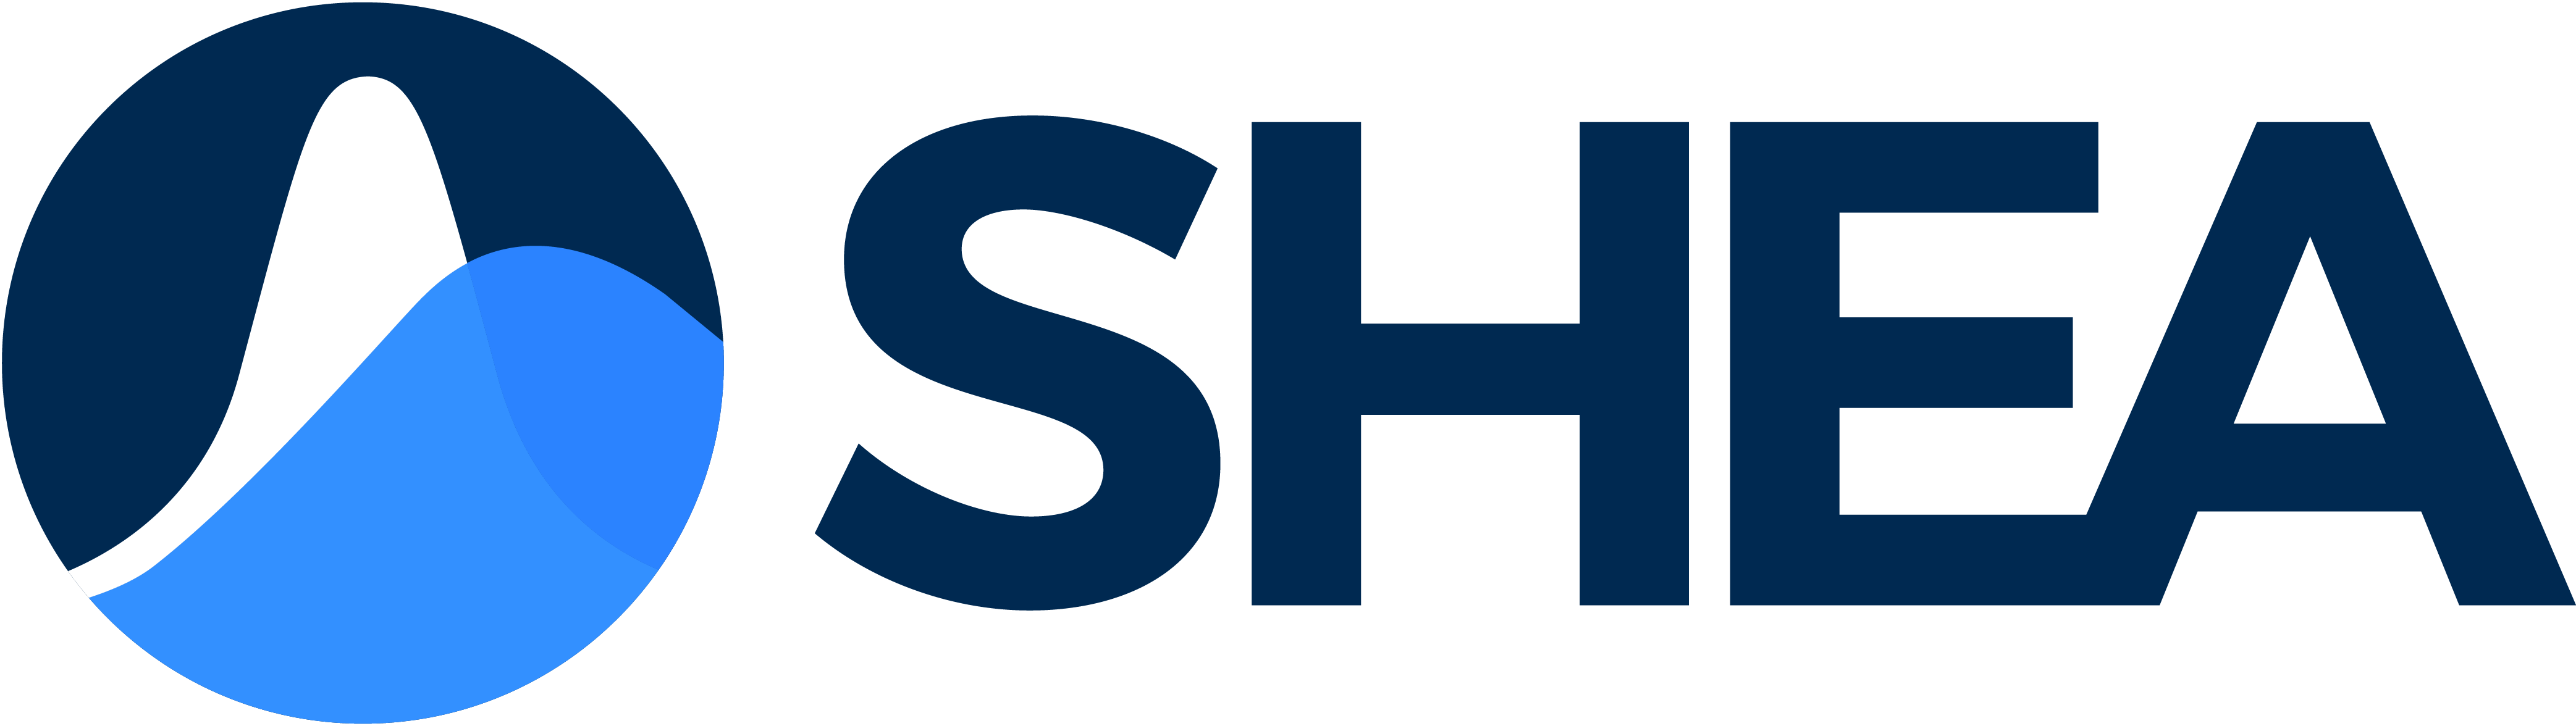 Society for Healthcare Epidemiology of America (SHEA) logo